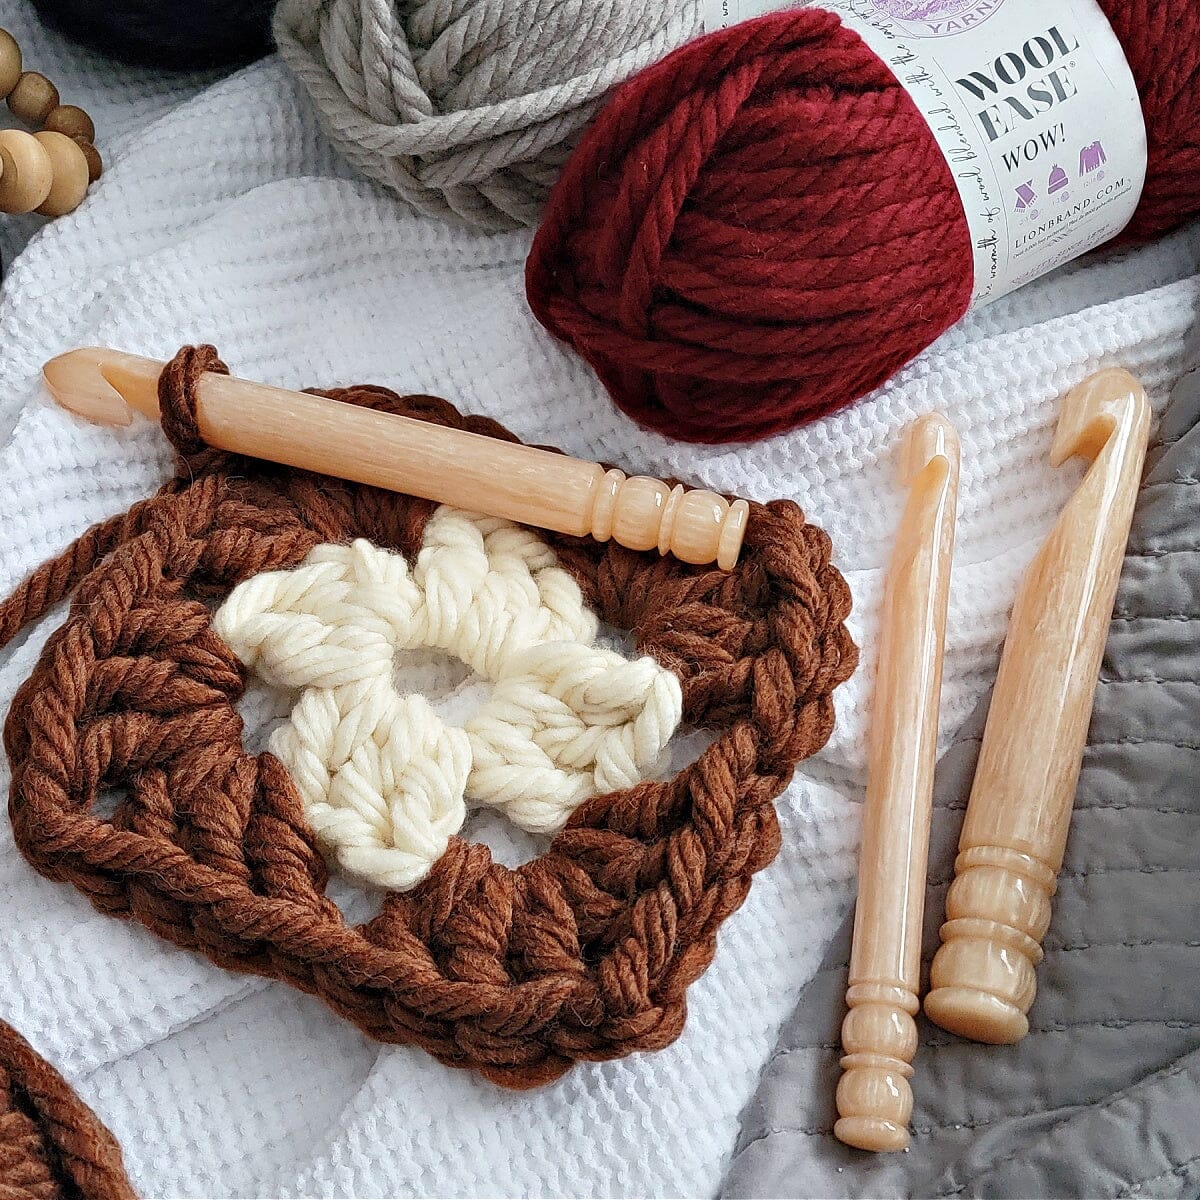 Jumbo Wood Crochet Hooks Q, R, S, T, U! - Designing Vashti